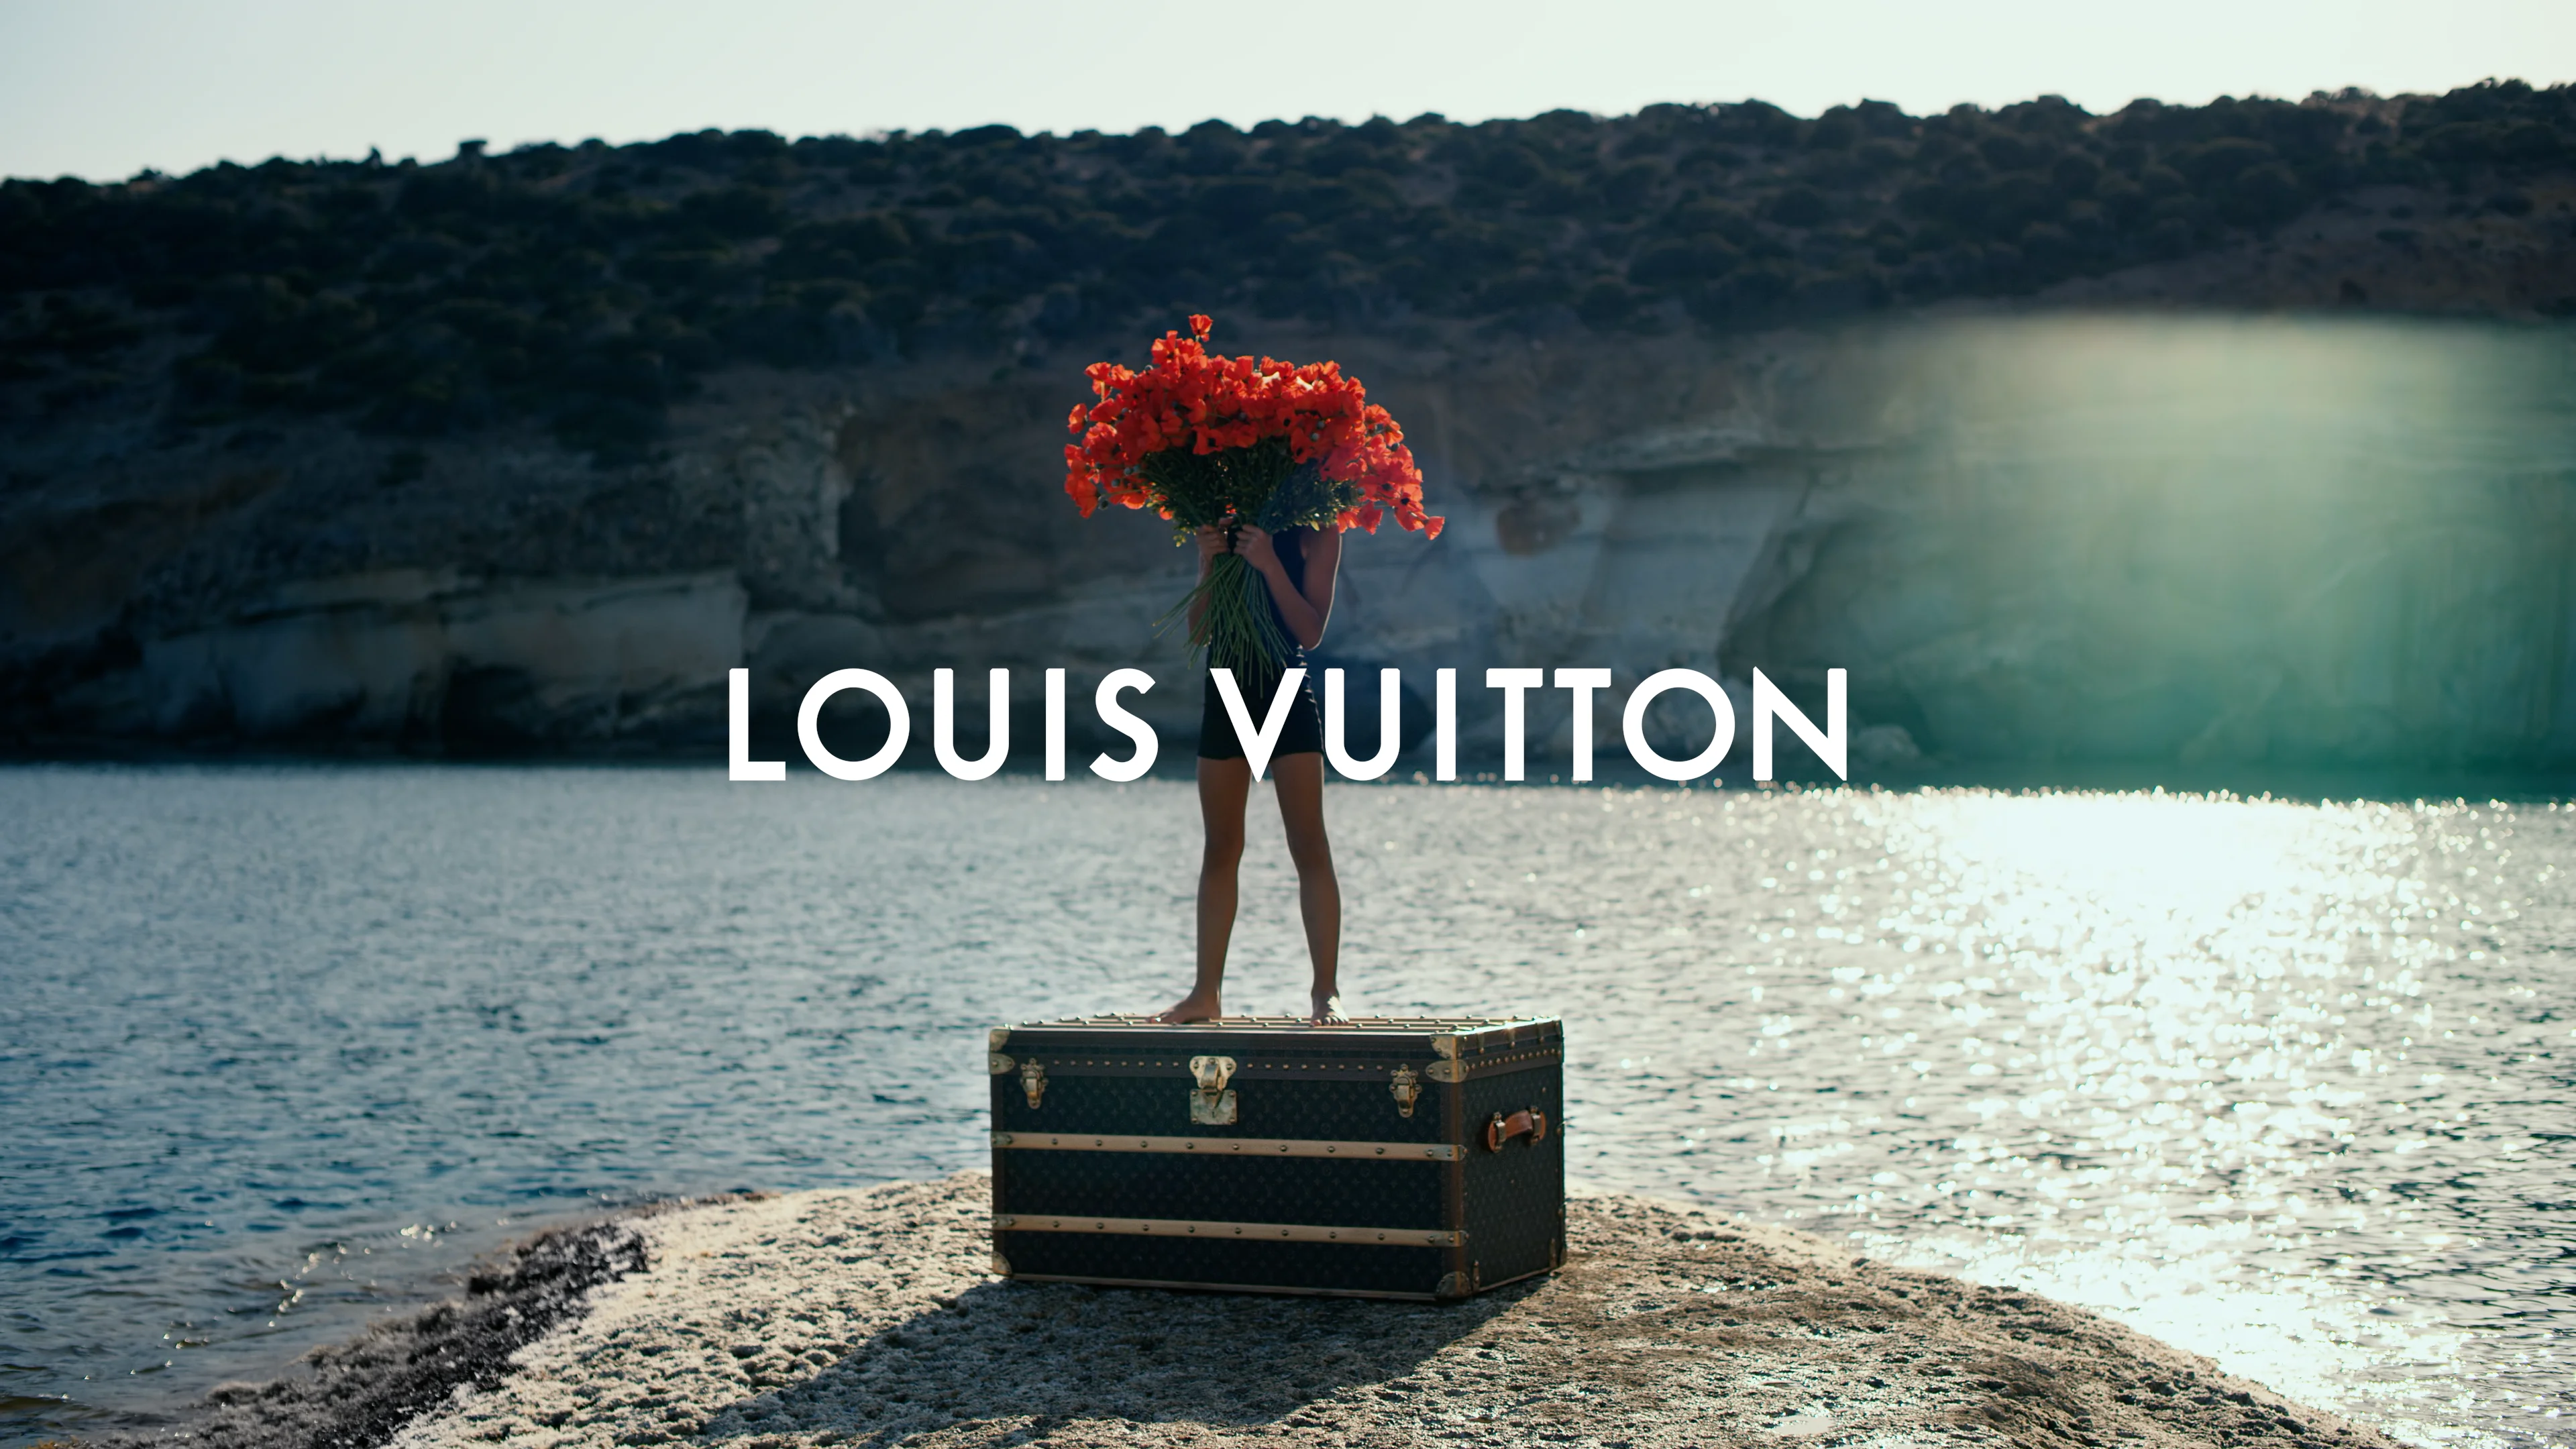 M58913 Louis Vuitton Monogram Flowers Petit Palais.mp4 on Vimeo